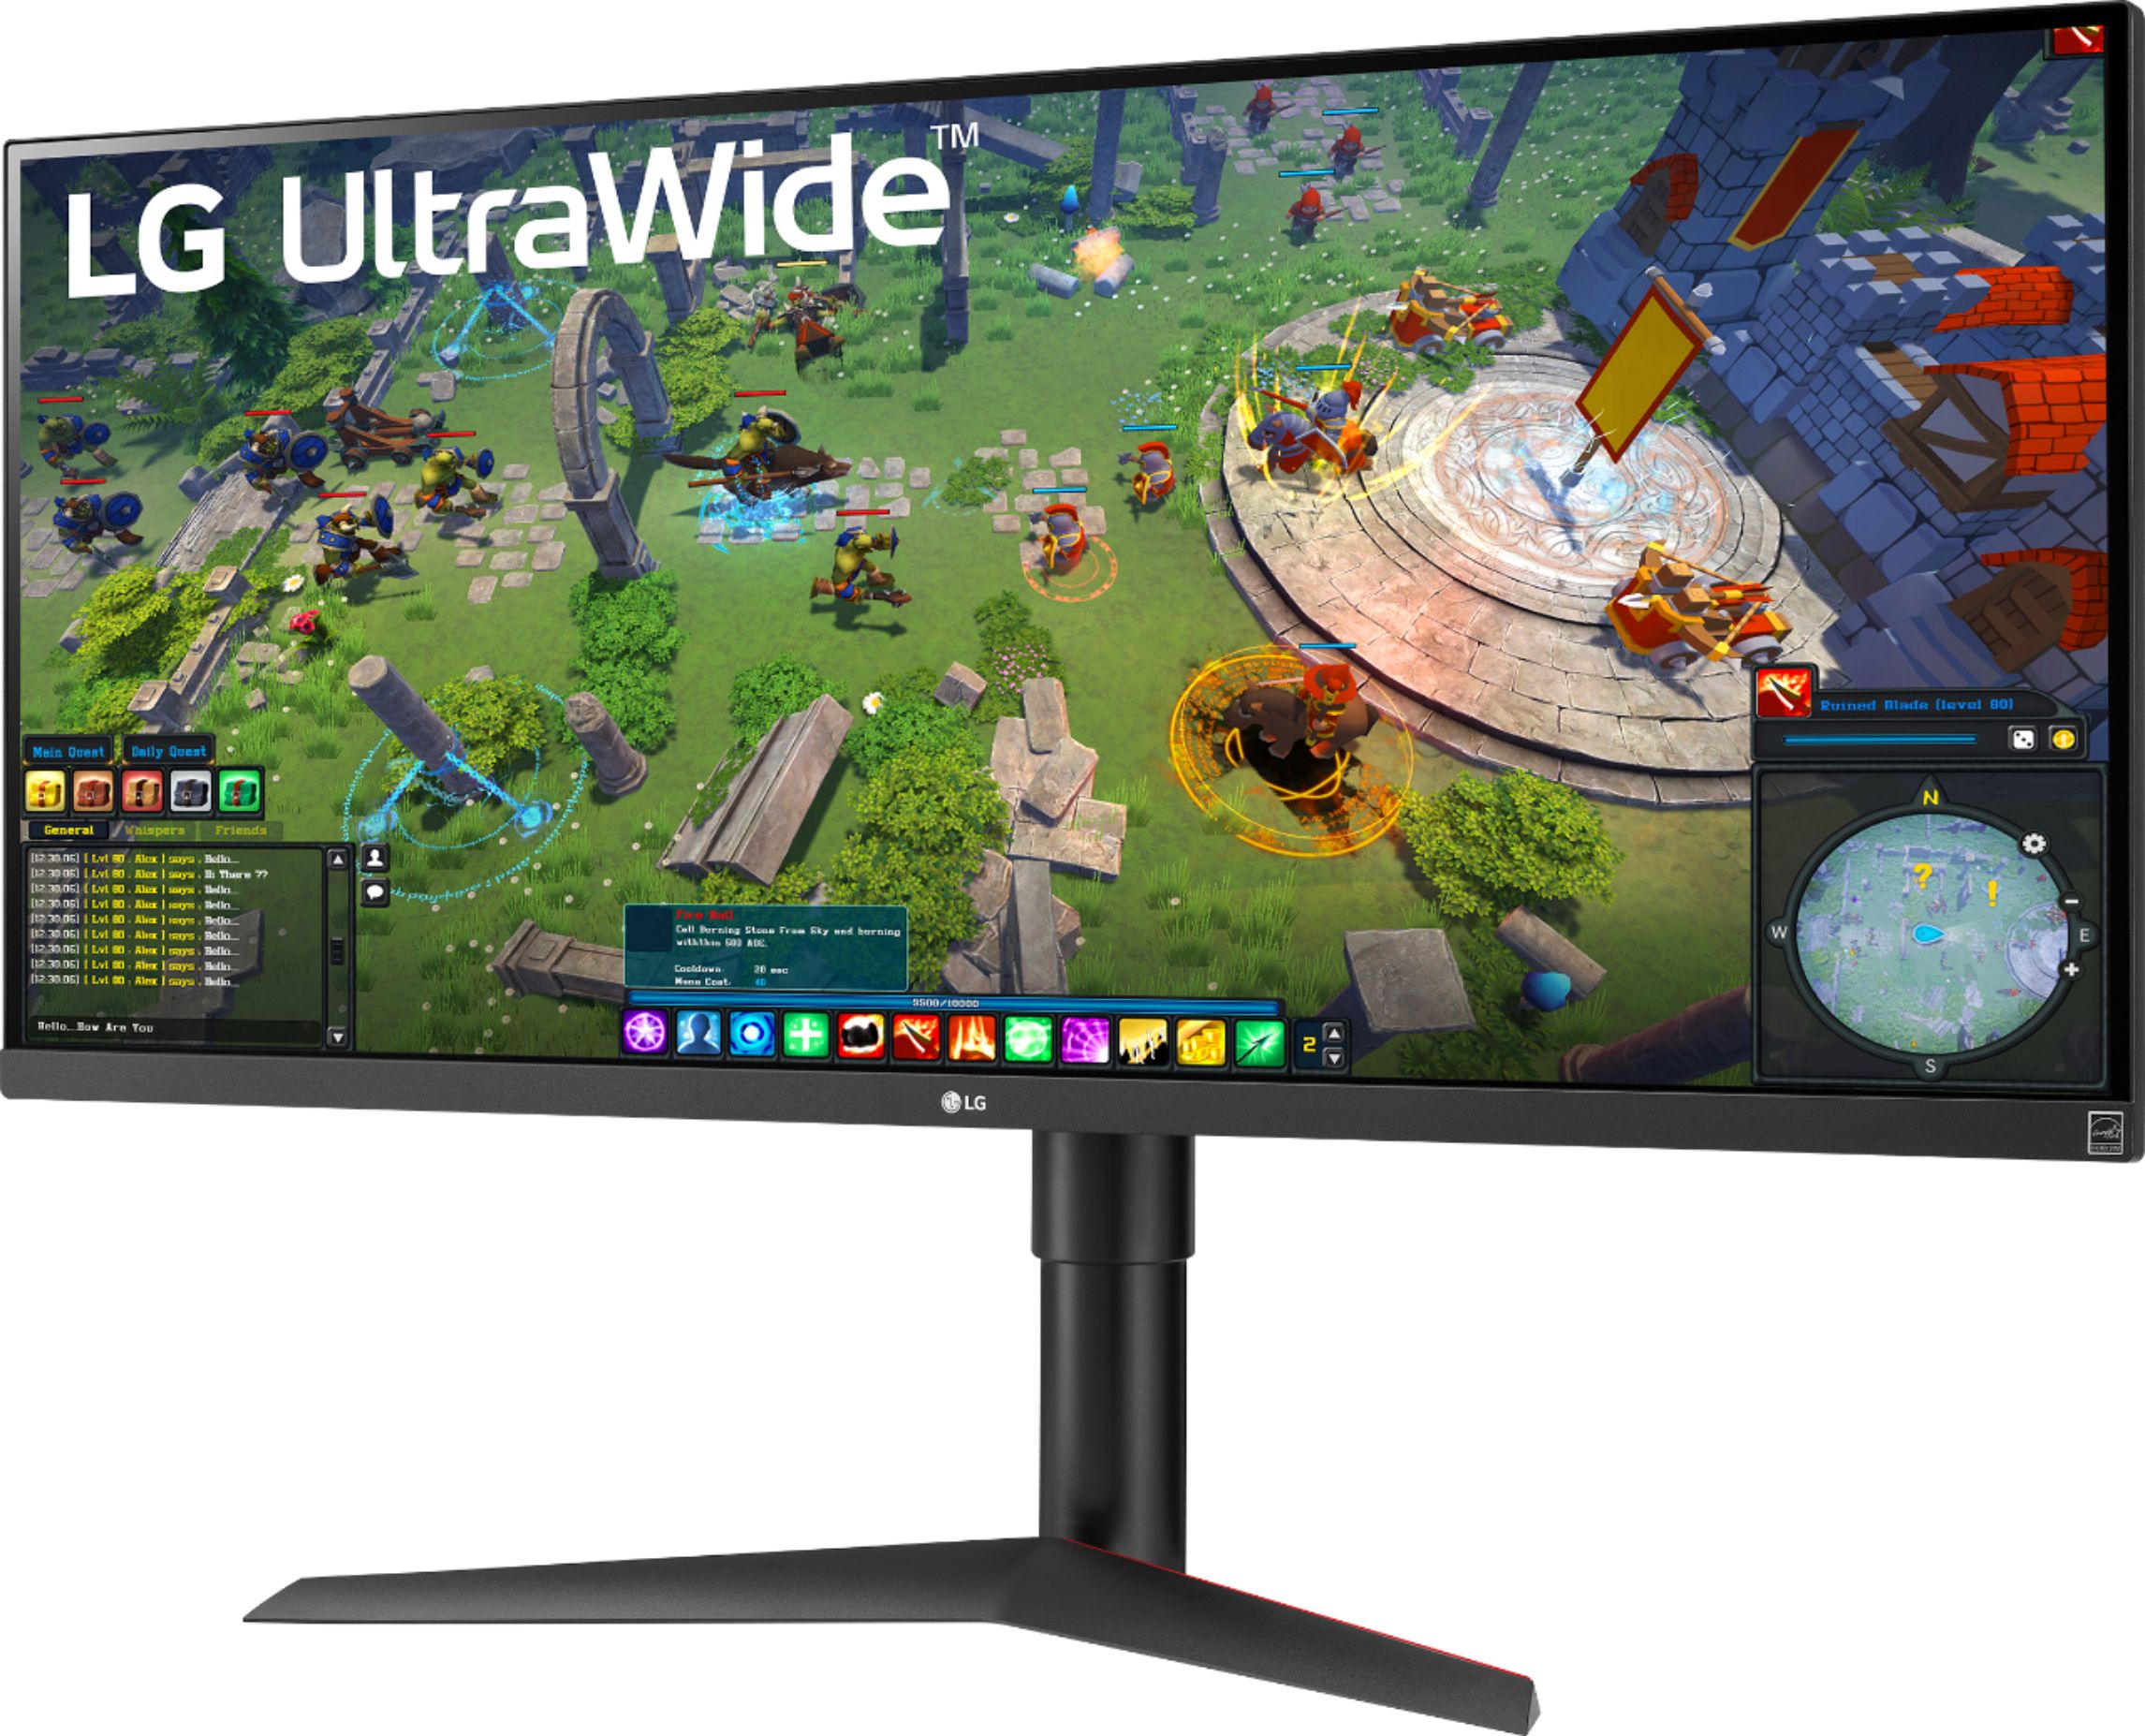 Left View: LG - 34” UltraWide FHD HDR 75Hz FreeSync Monitor (USB) - Black